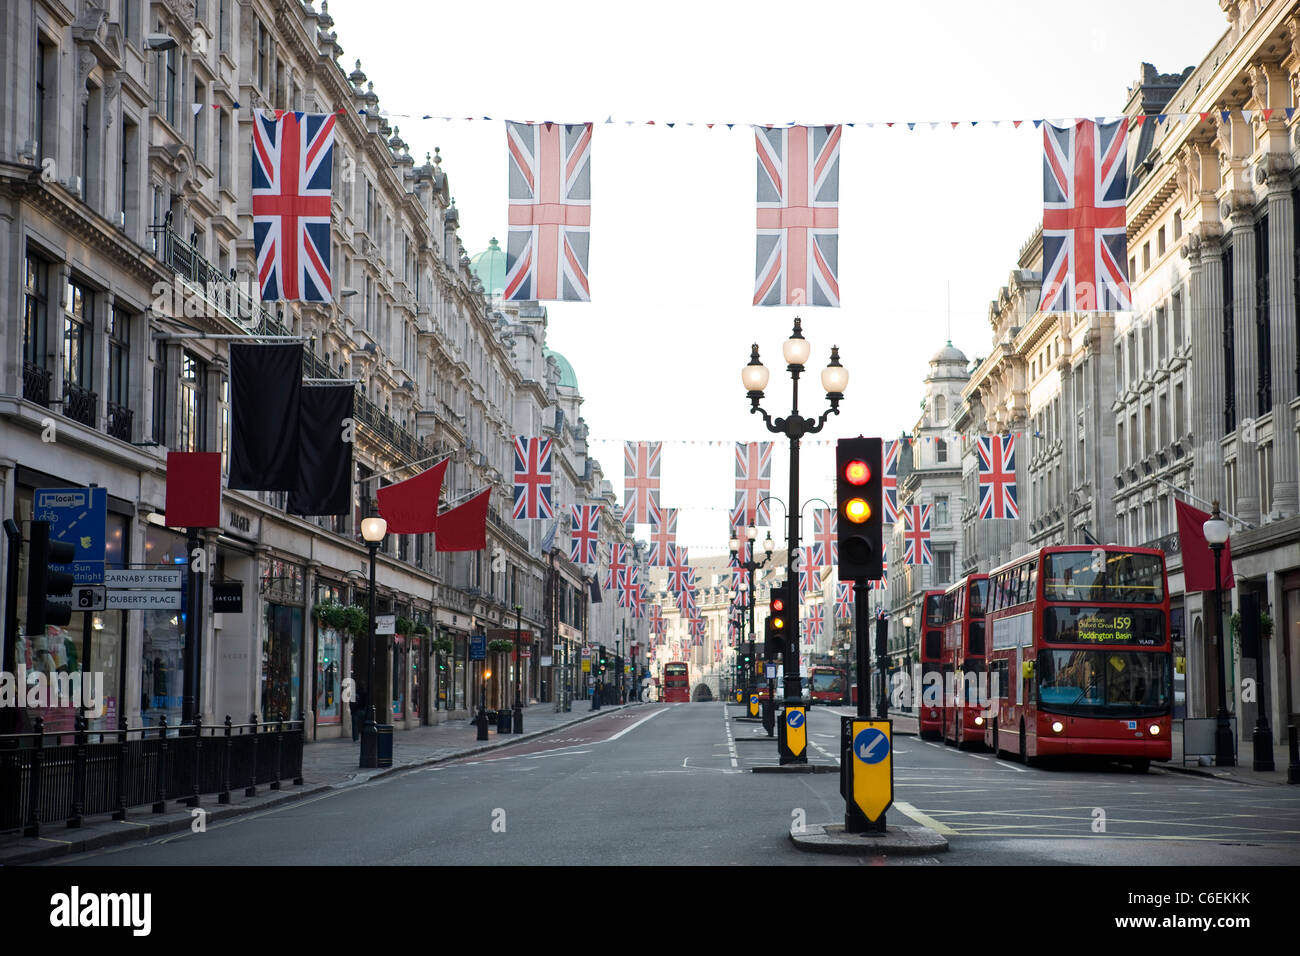 Union jack flags hanging on Regent Street, London Stock Photo